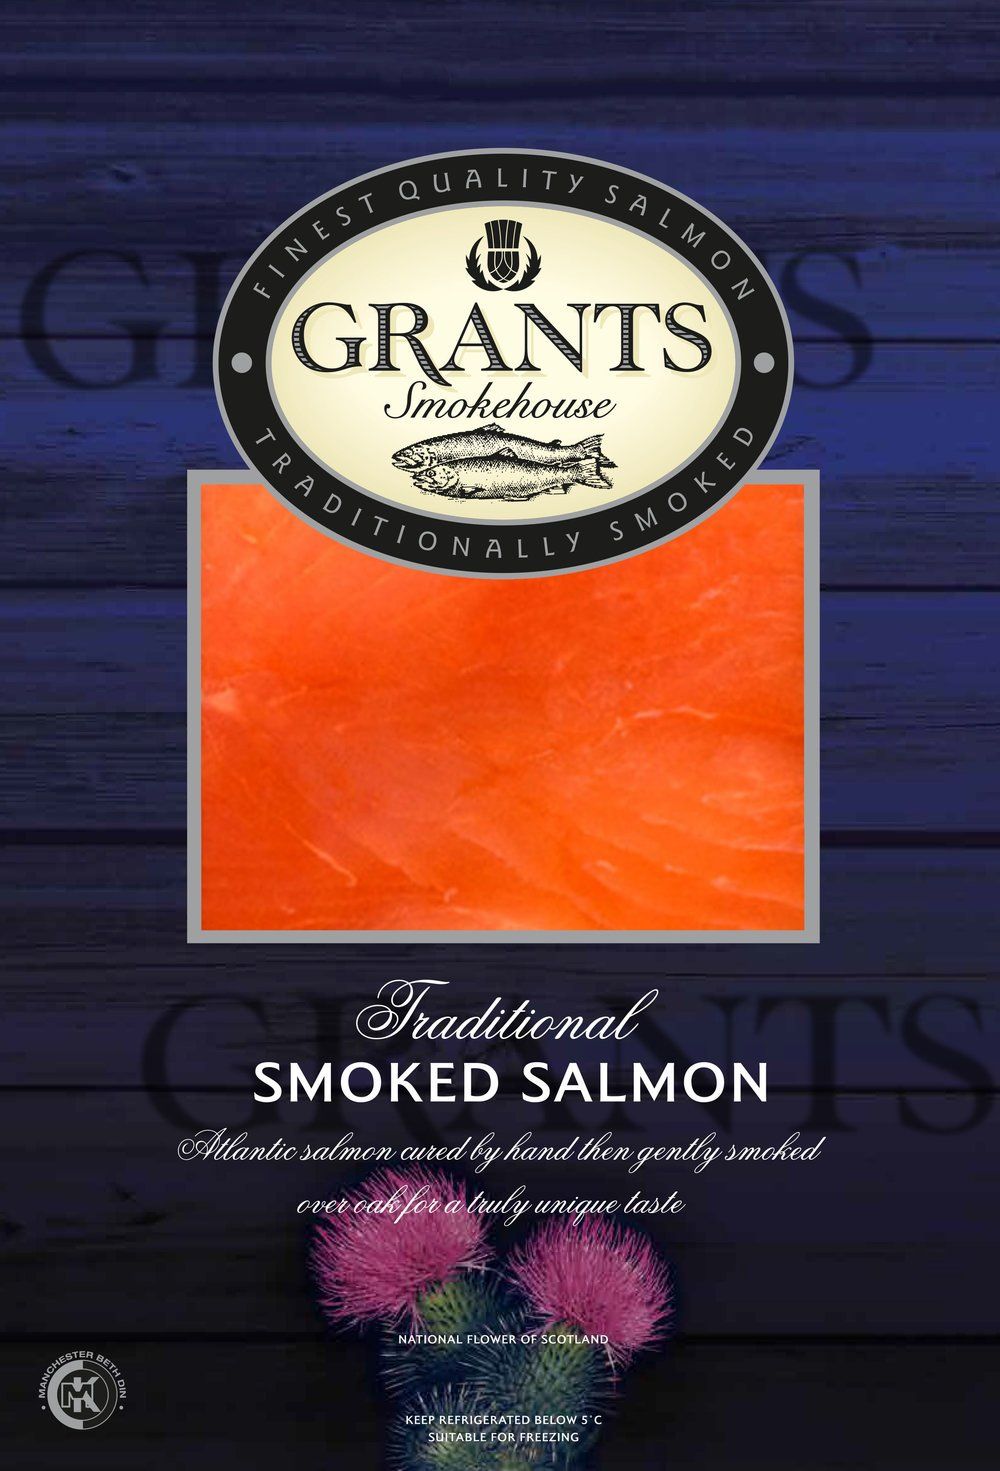 GRANTS TRADITIONAL SMOKED ATLANTIC SALMON